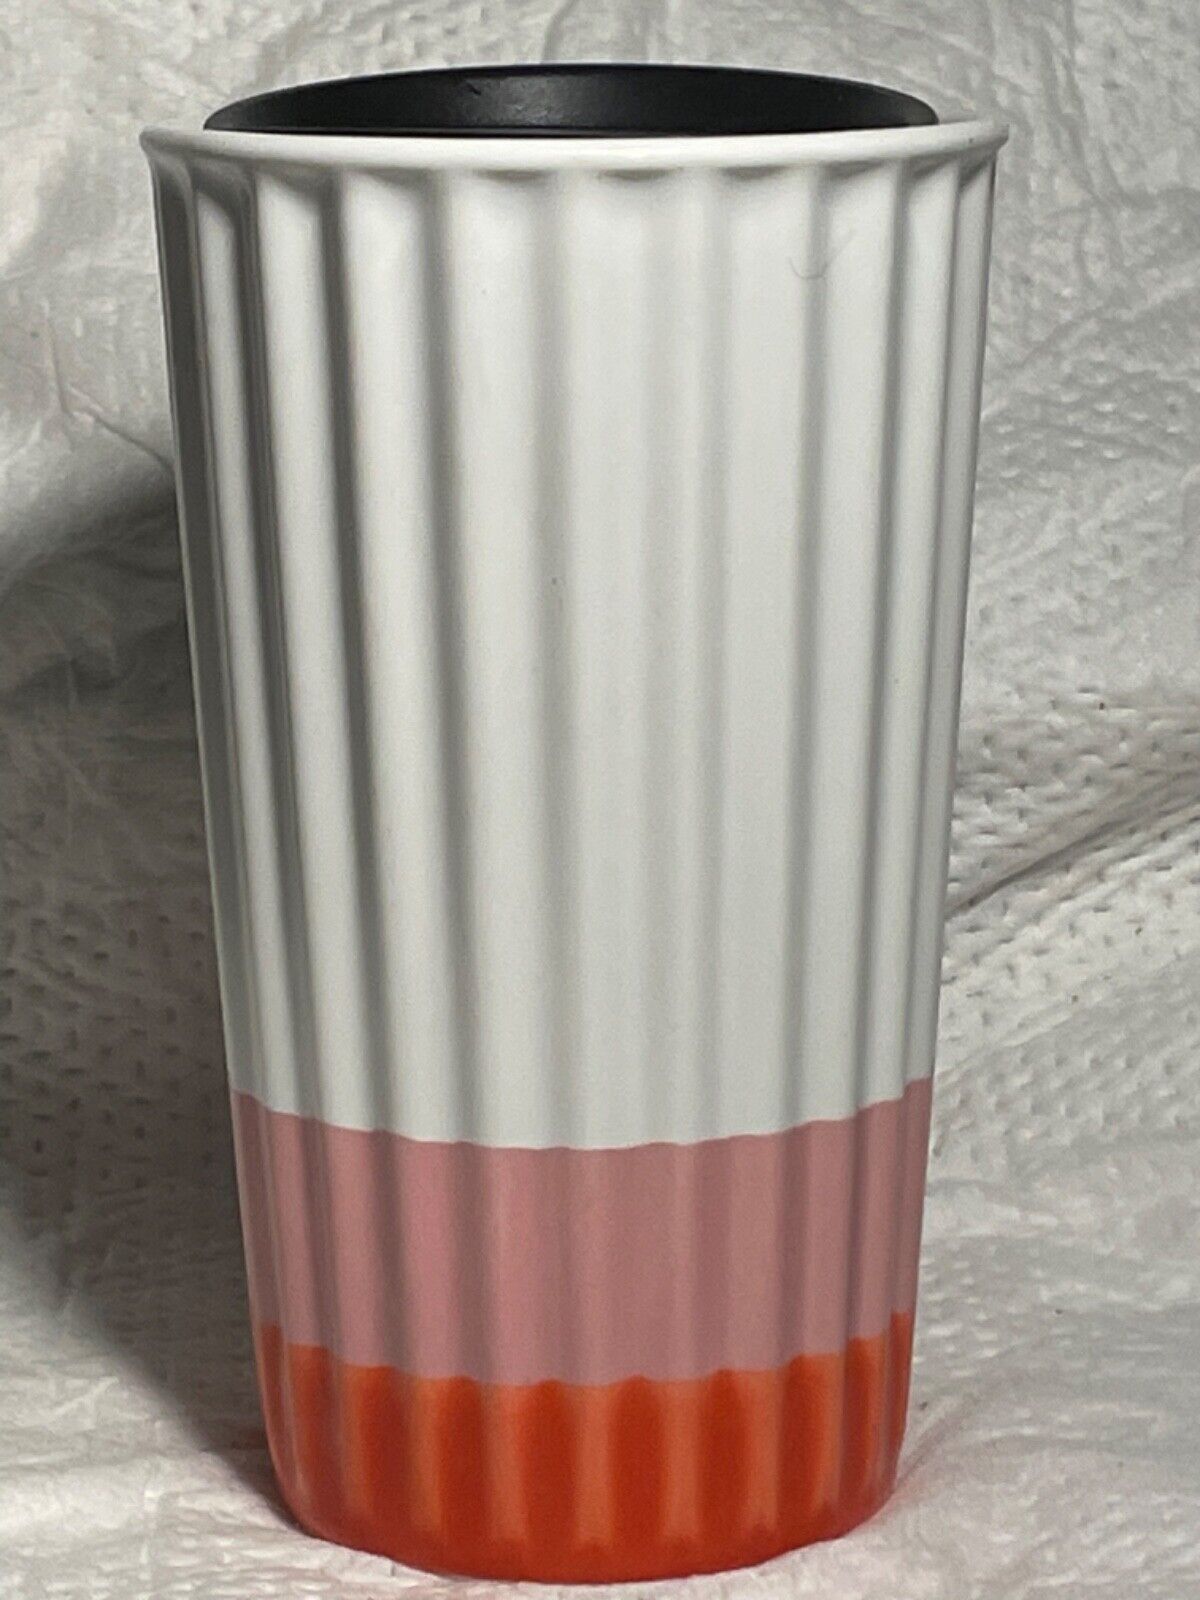 Starbucks Ceramic Travel Tumbler Coffee Mug White Pink Striped Ribbed 10 fl oz